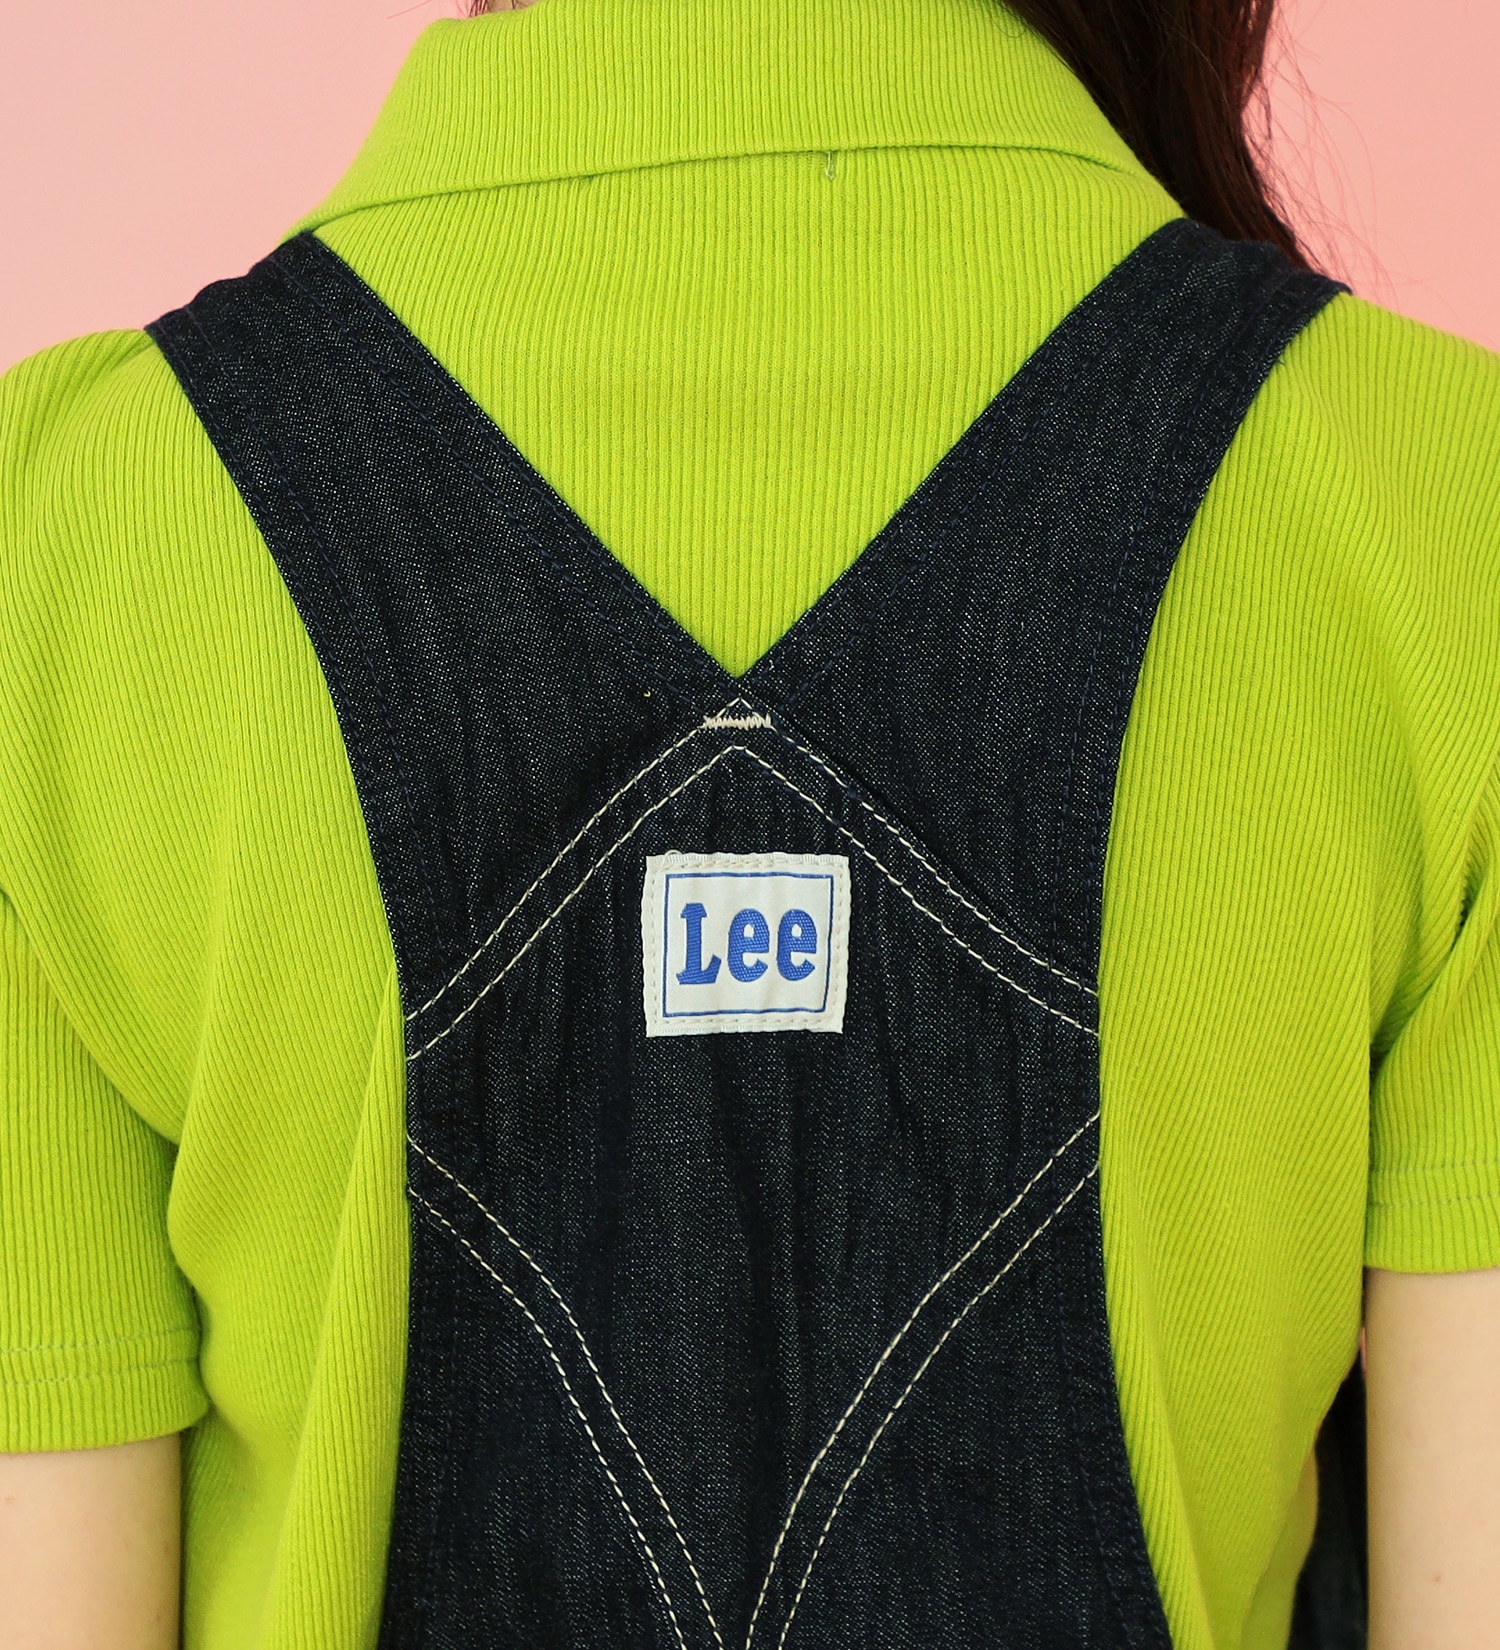 Lee(リー)の【130-160cm】キッズ ジャンパースカート|オールインワン/ジャンパースカート/キッズ|インディゴブルー